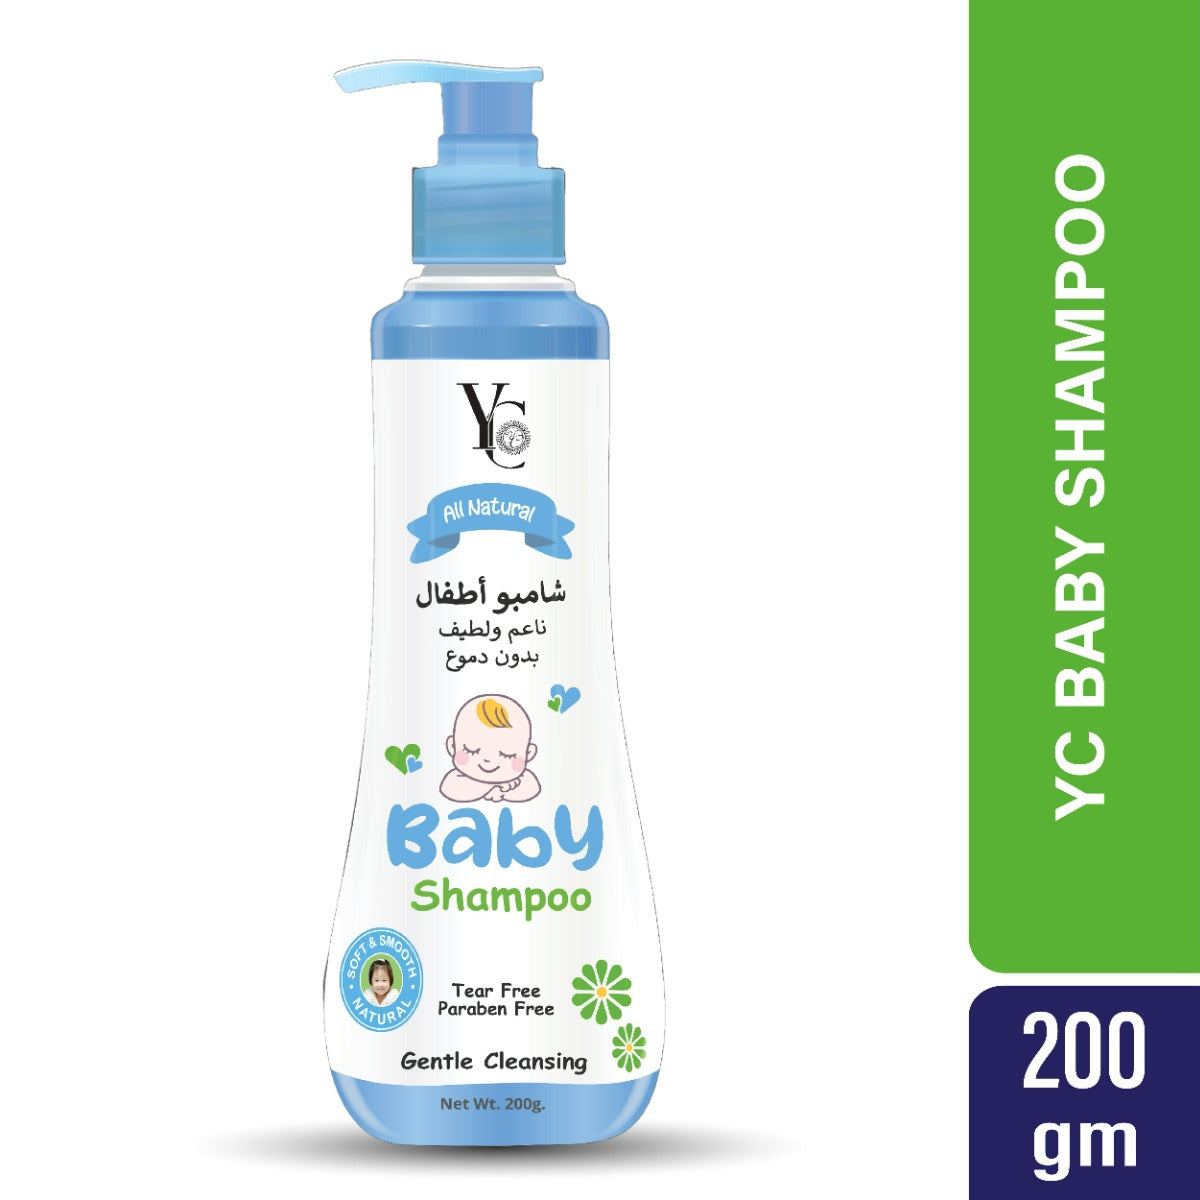 YC Baby Shampoo (200gm)